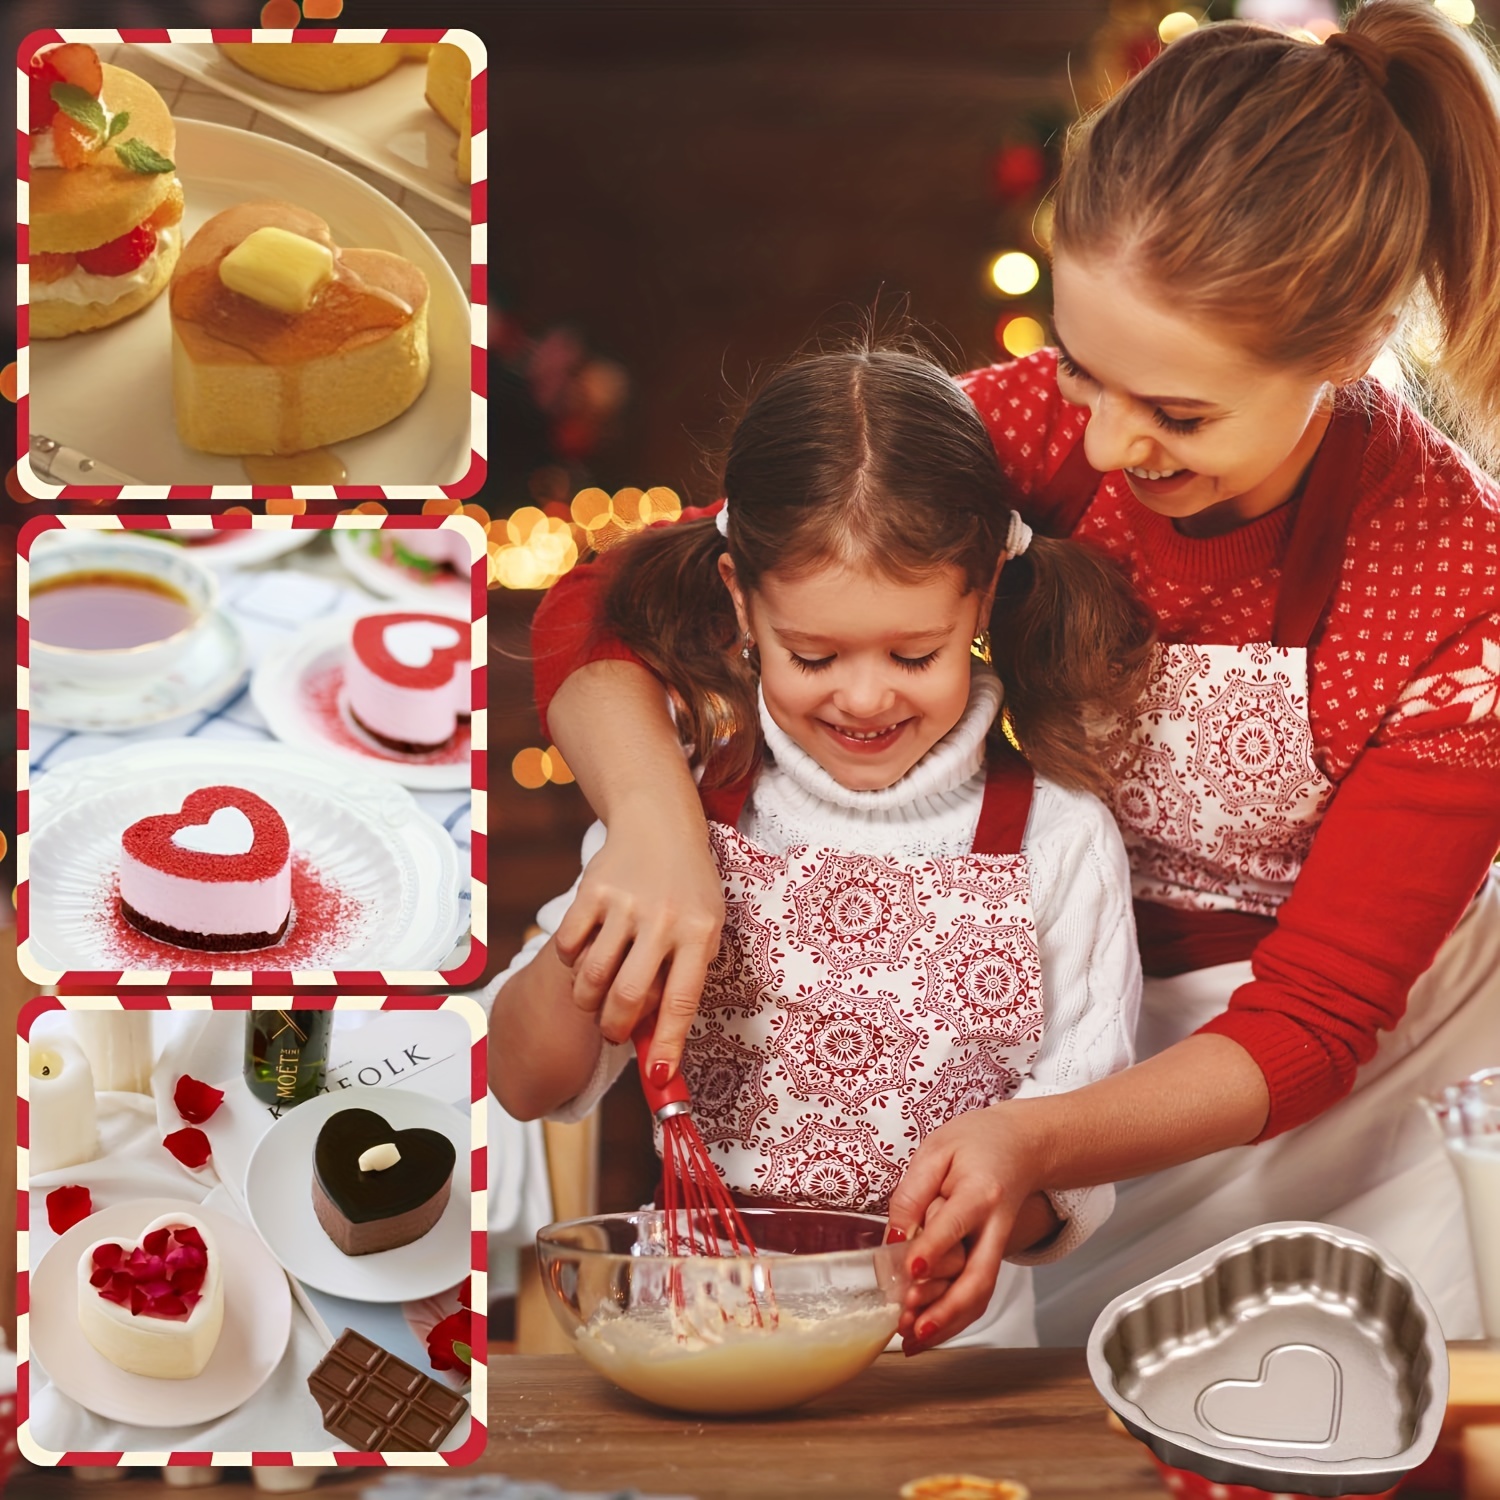 Easy Christmas Silicone Molds Baking Ideas; Cakes, Fudge